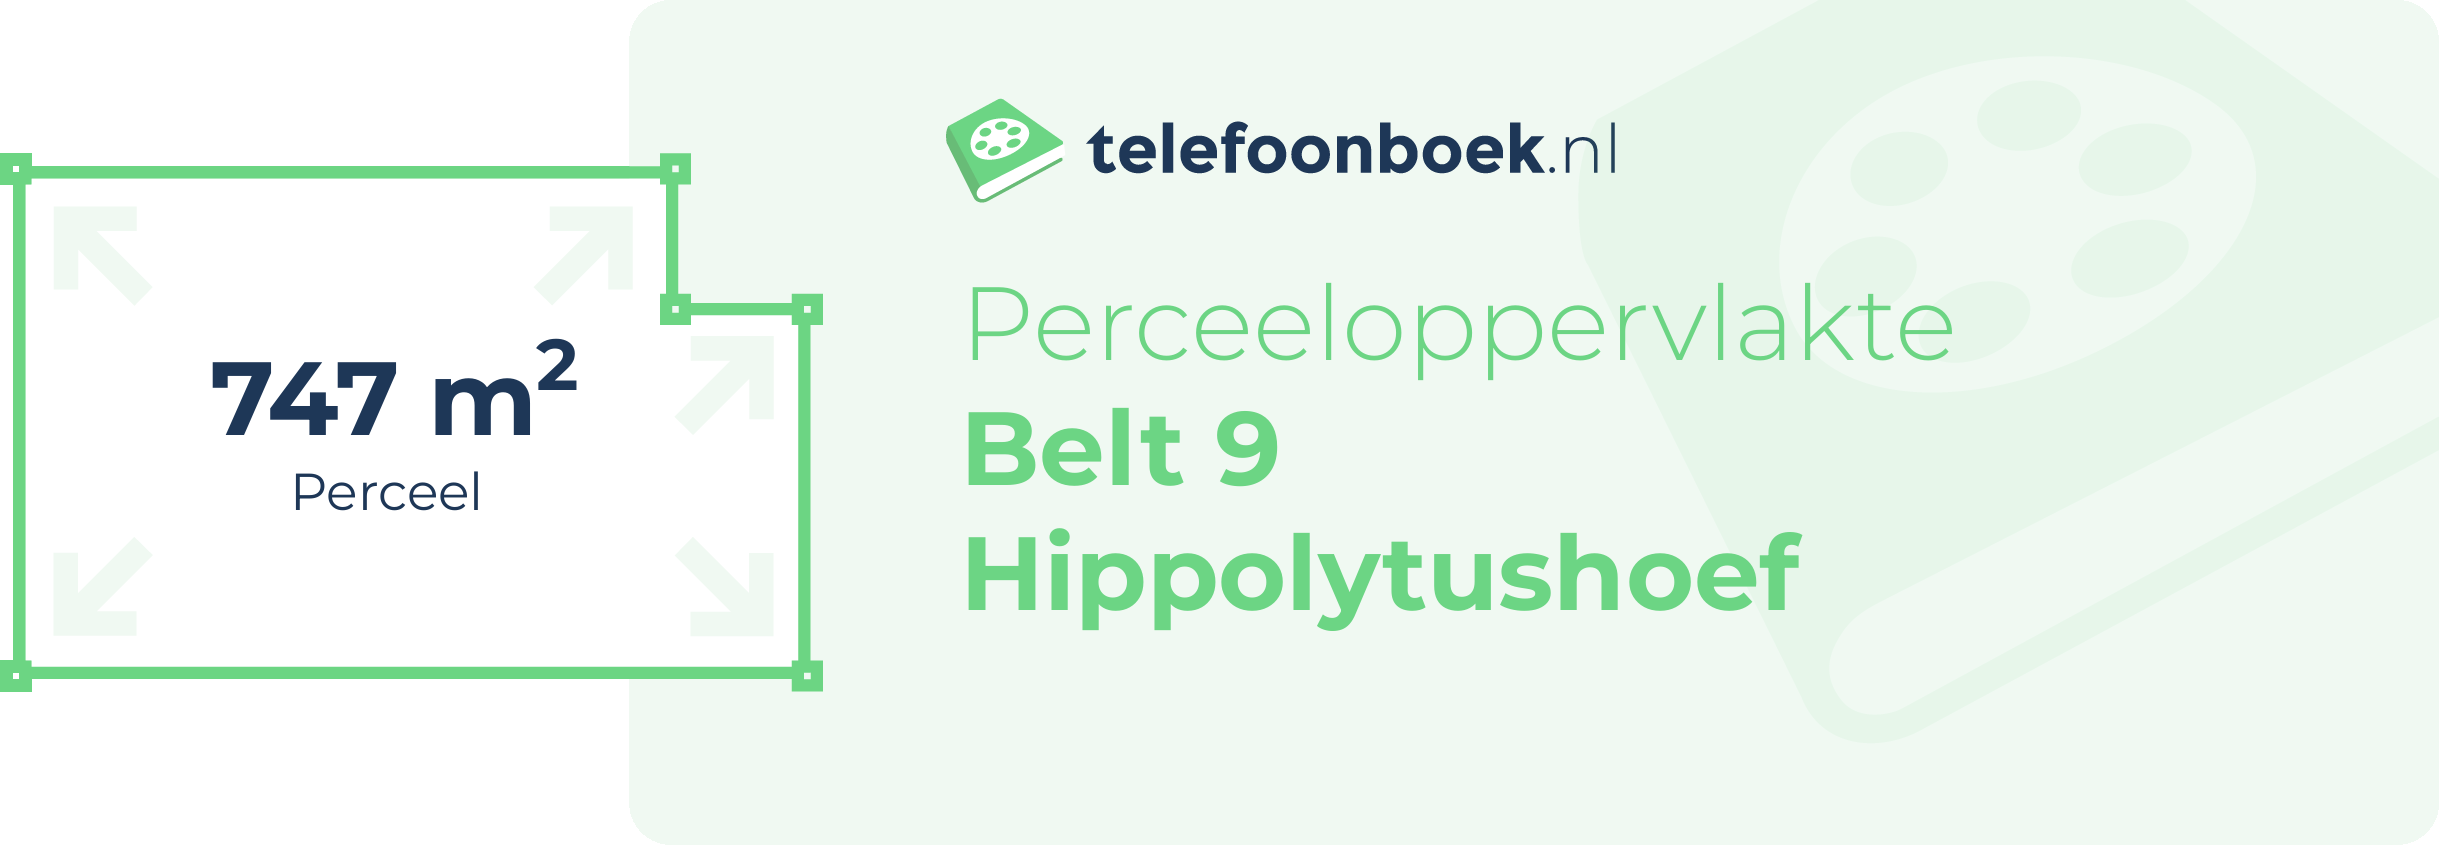 Perceeloppervlakte Belt 9 Hippolytushoef